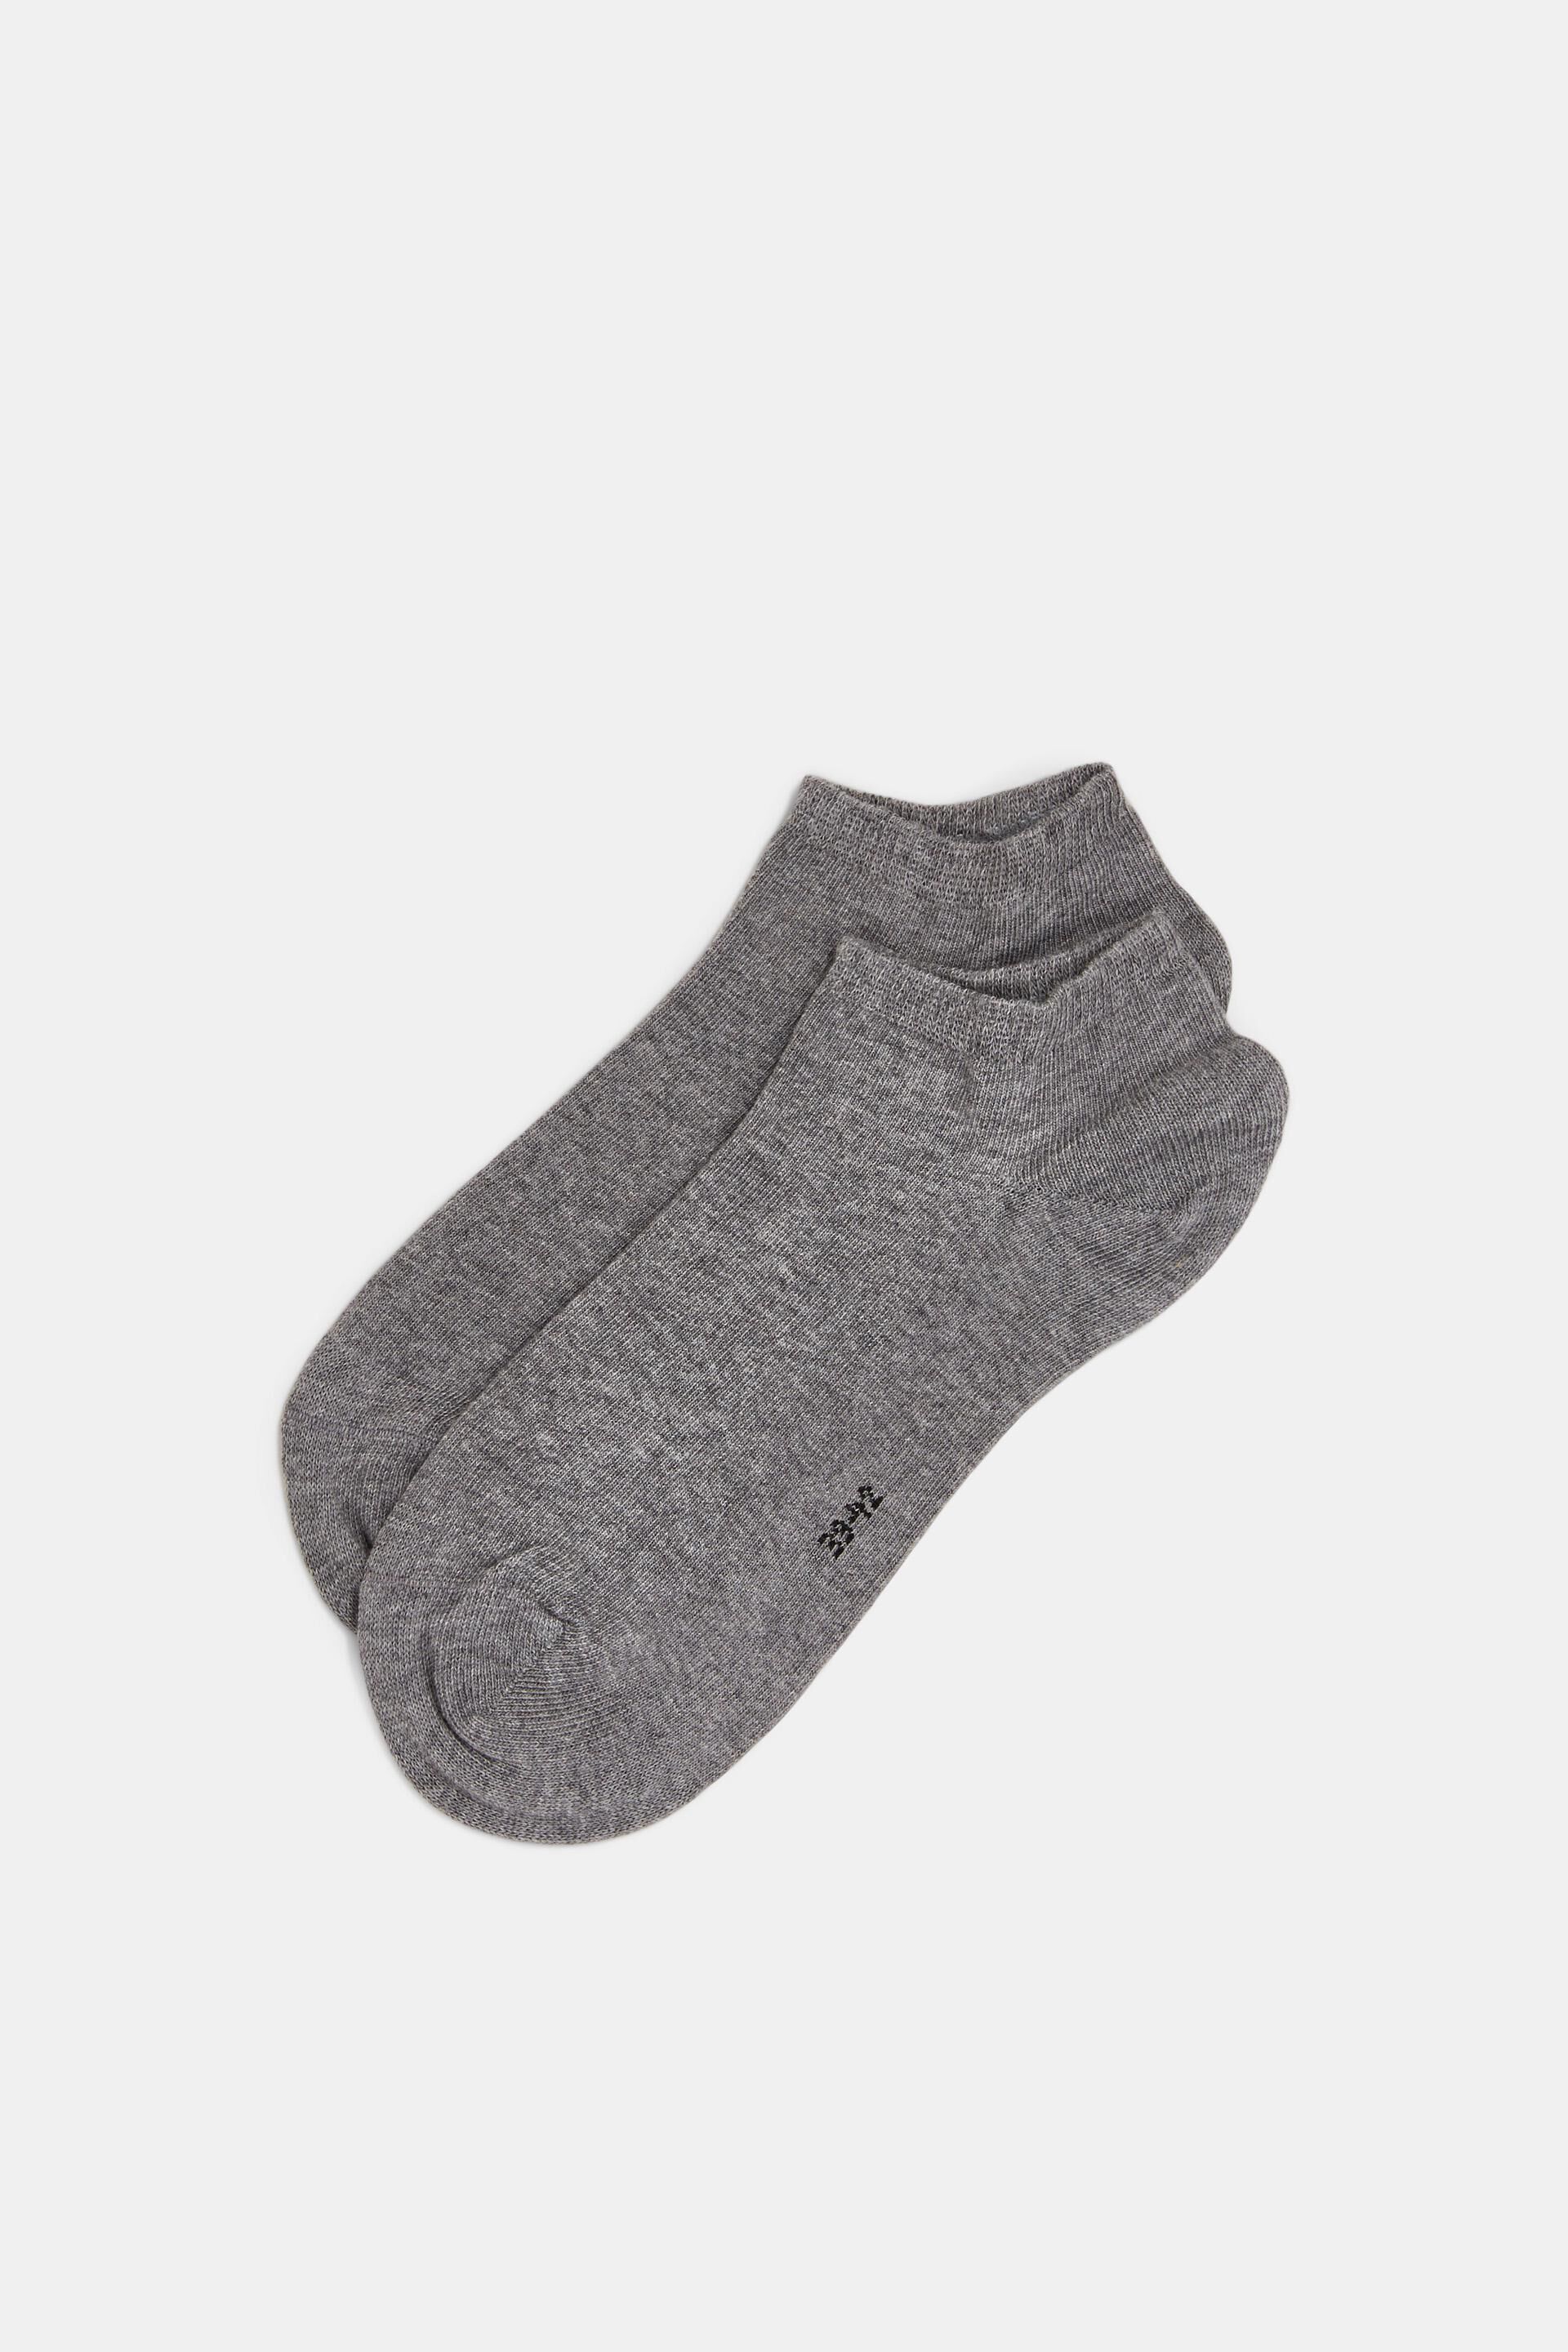 Esprit cotton of trainer organic socks, 2-pack